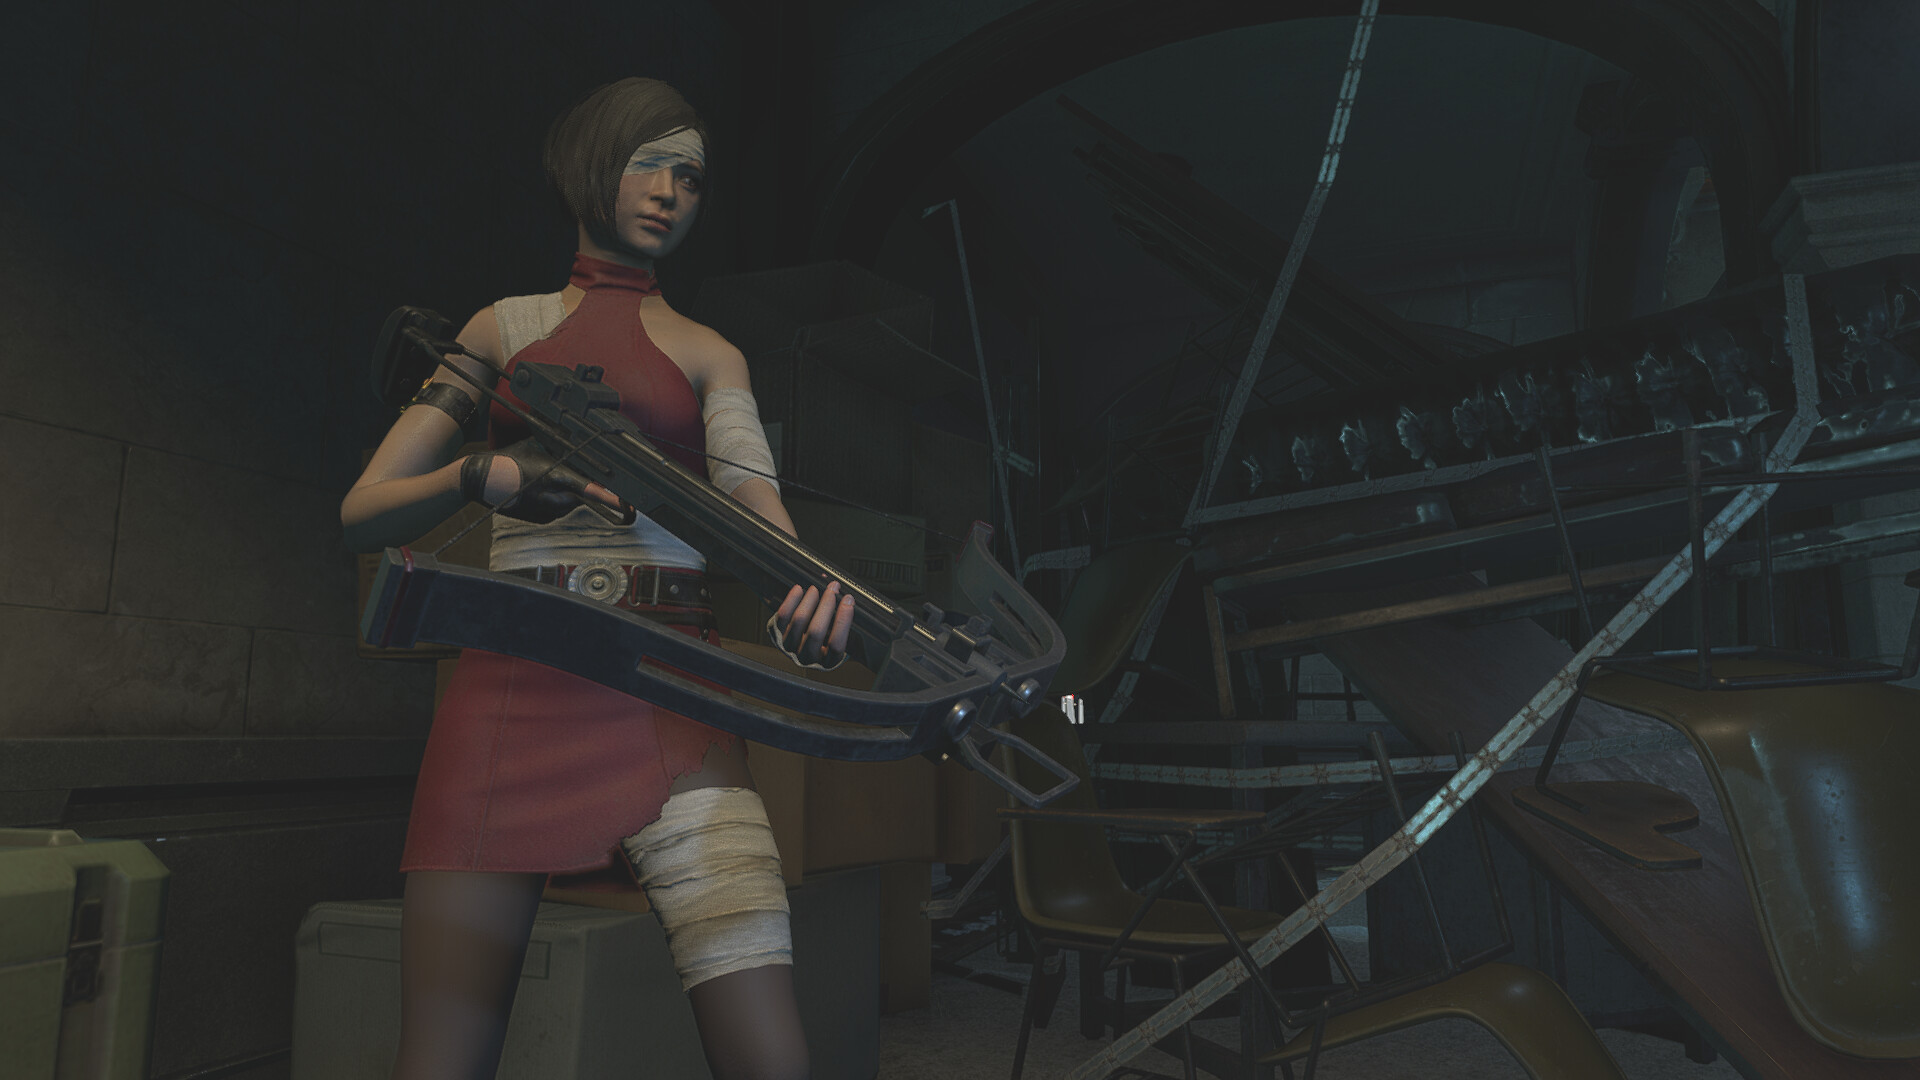 Save 25% on Resident Evil Re:Verse - Ada Skin: Still Kicking (The